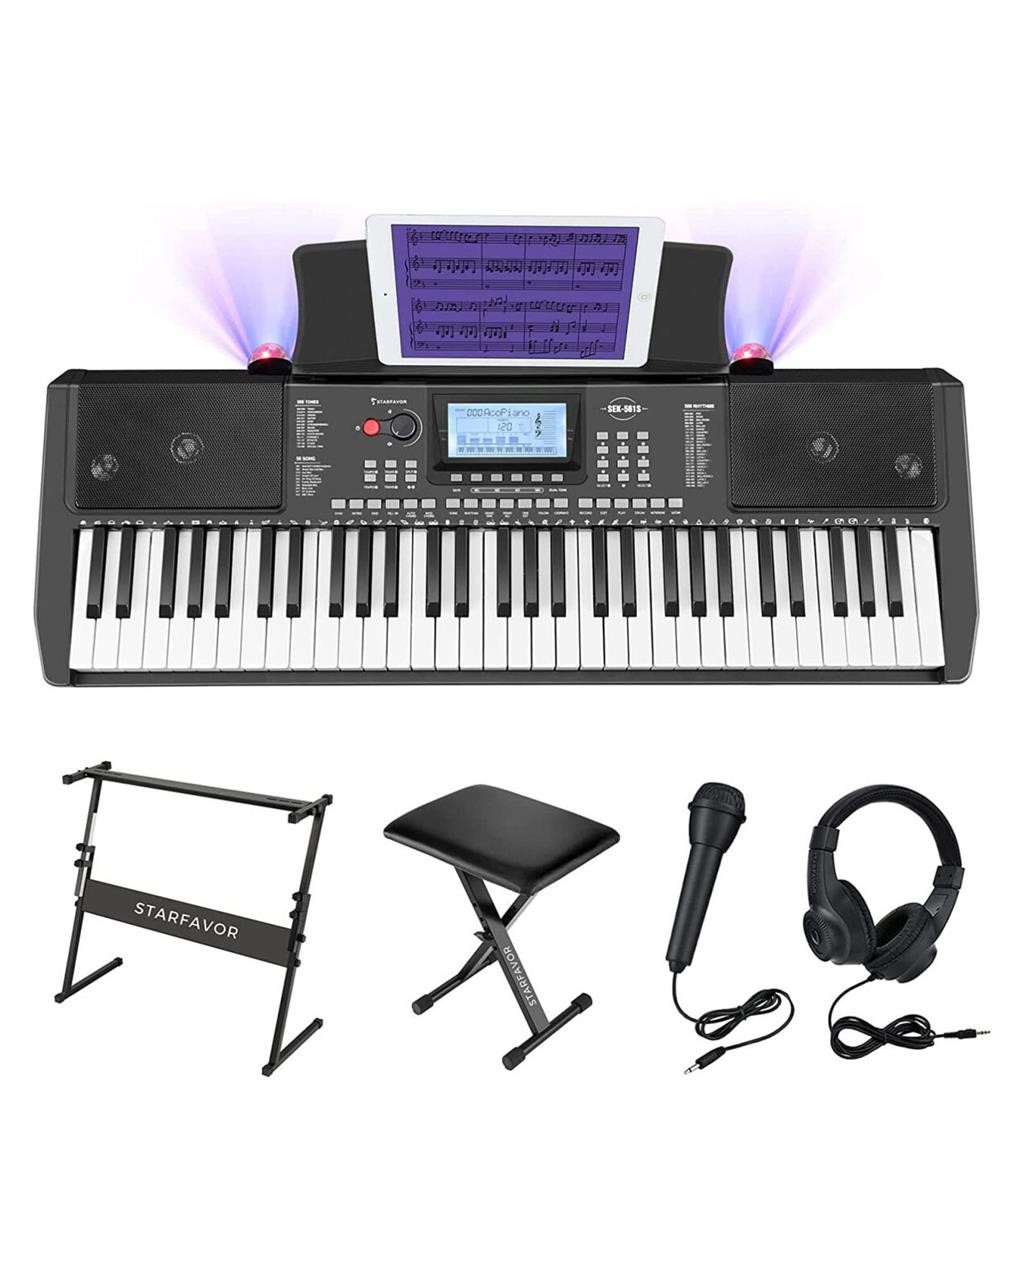 Starfavor 61 Key Electronic Keyboard Piano with LC